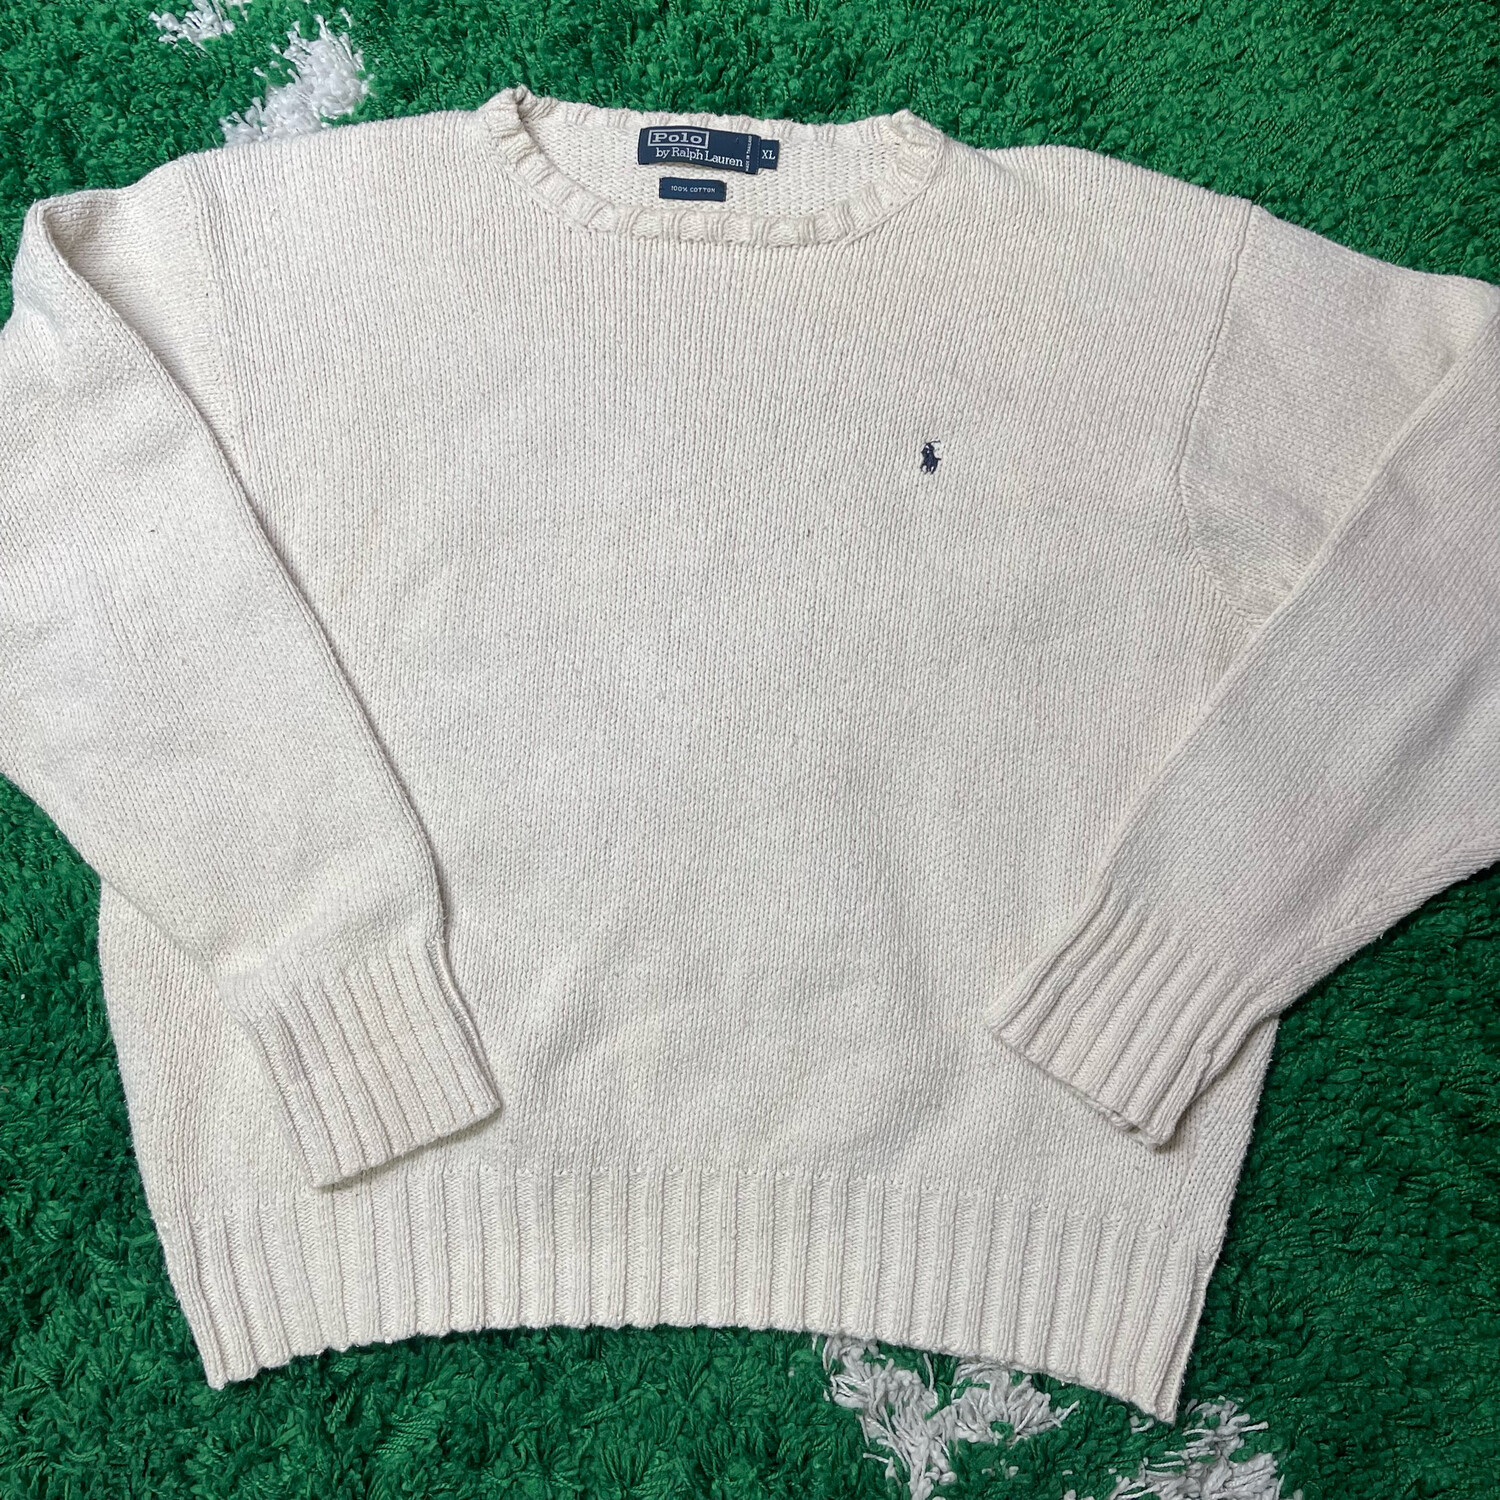 Polo Ralph Lauren White Knit Sweater Size XL